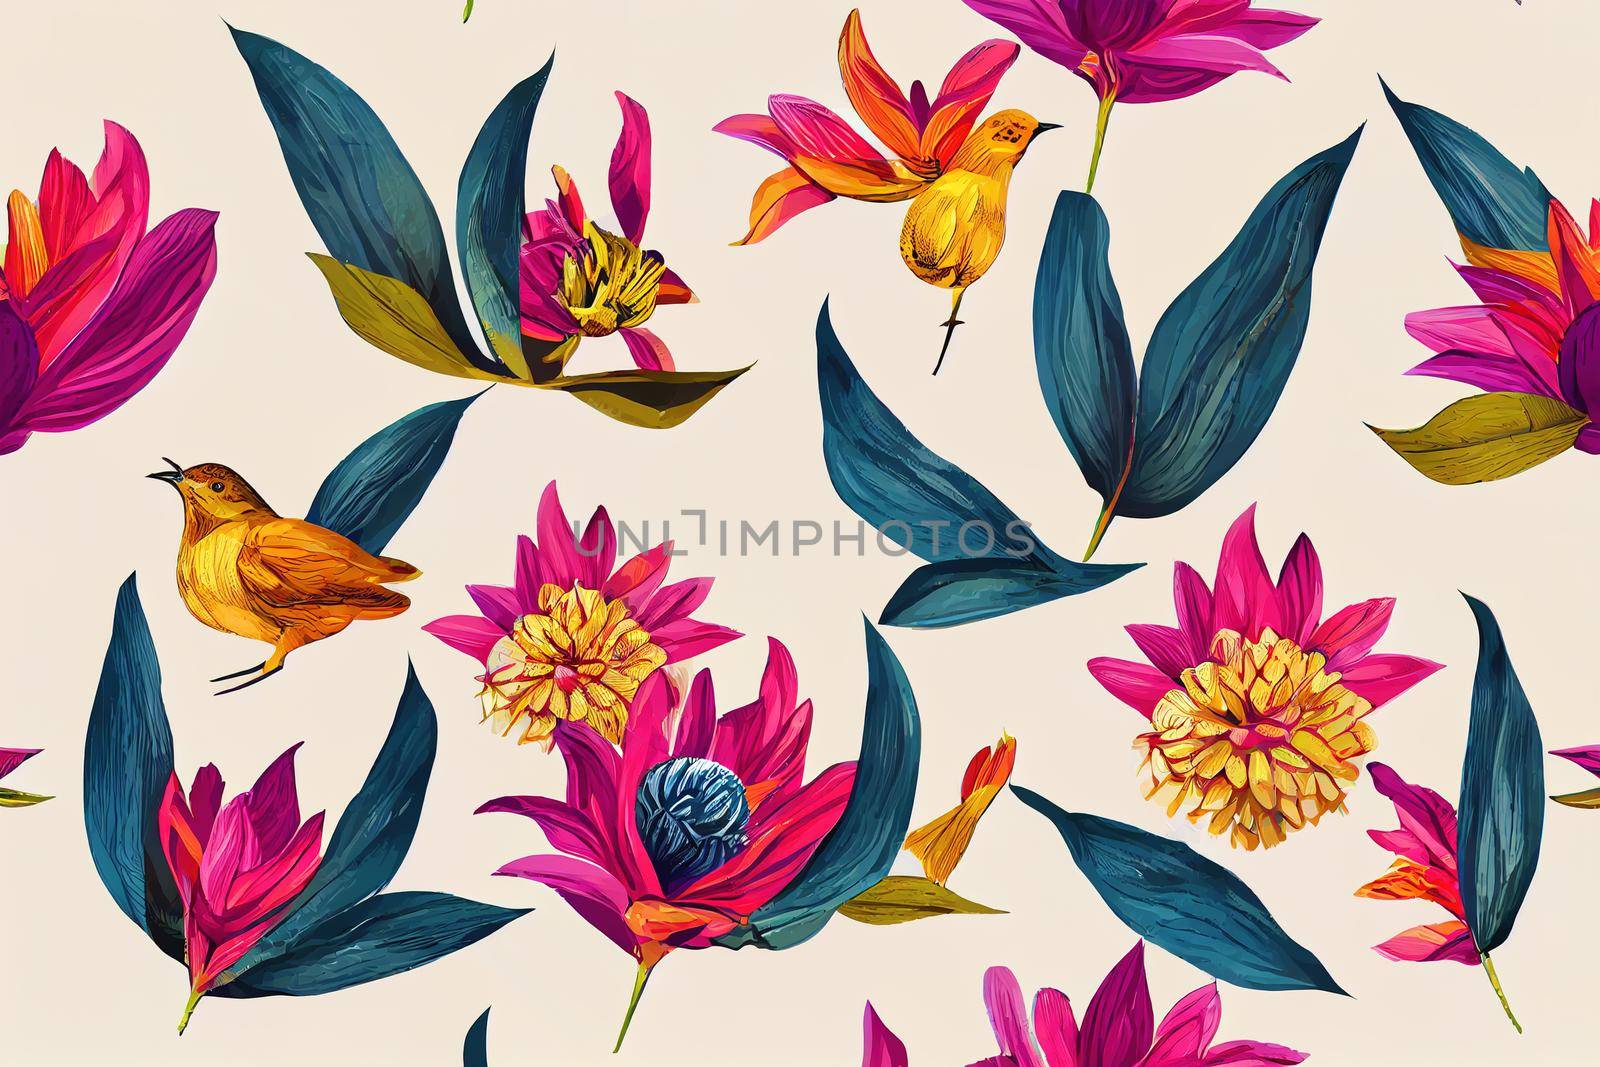 Collage style pattern design. Hand-sketched bird on dahlia flower by 2ragon